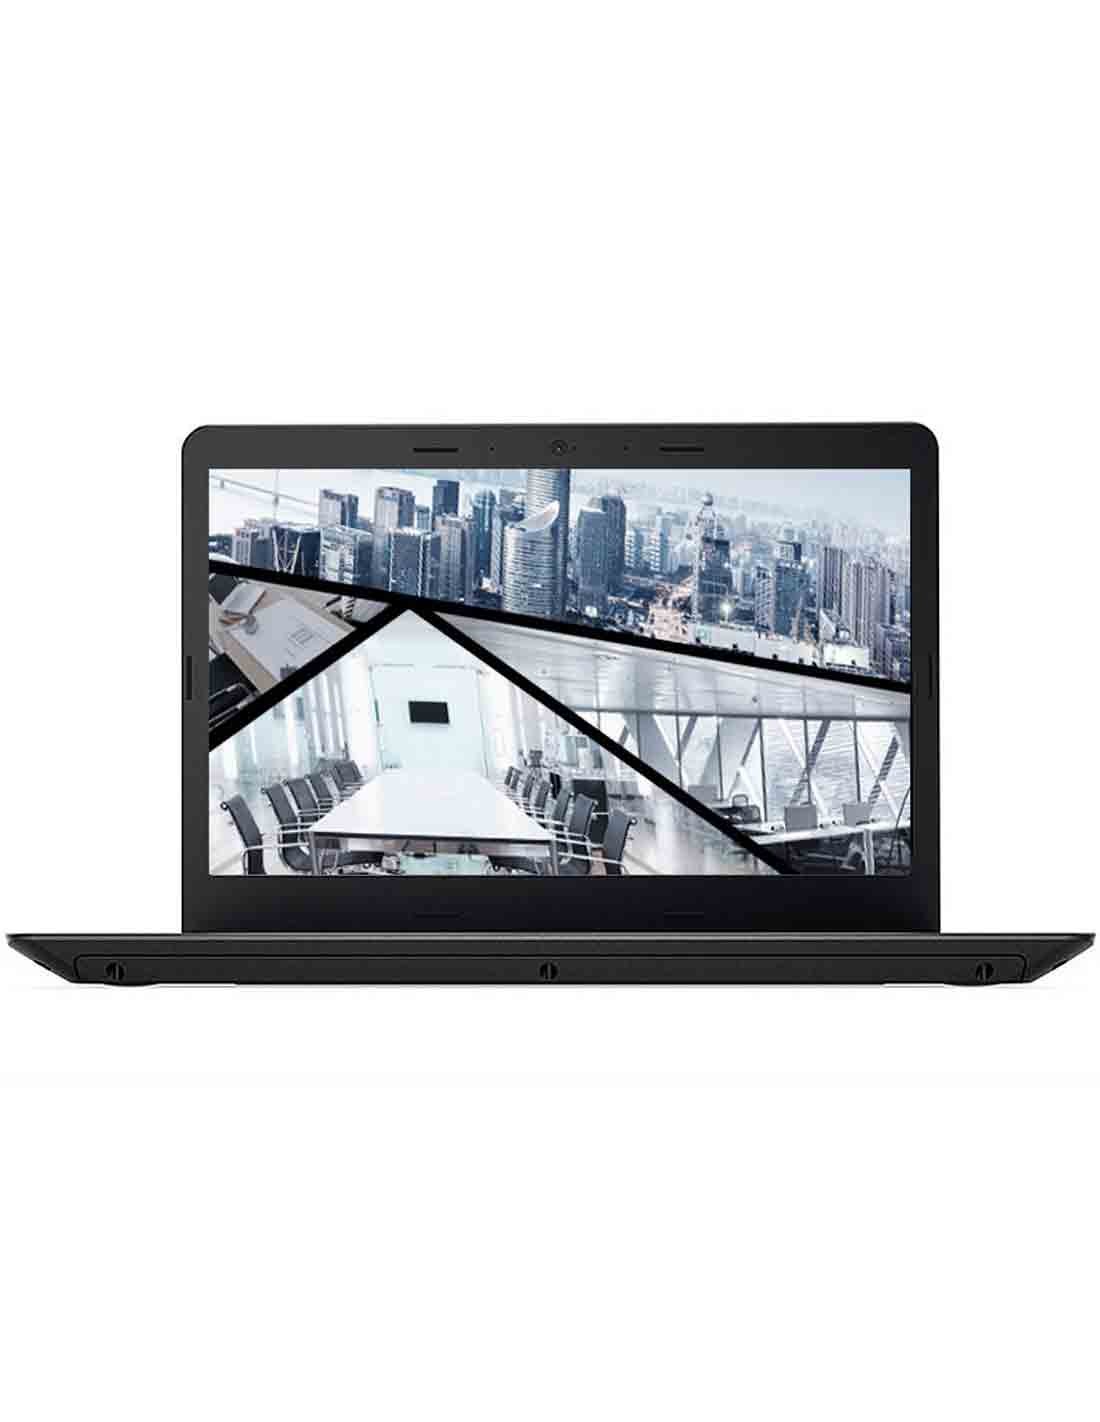 Buy Online Lenovo ThinkPad e470 IntelCore i7 at Affordable Price in Dubai UAE